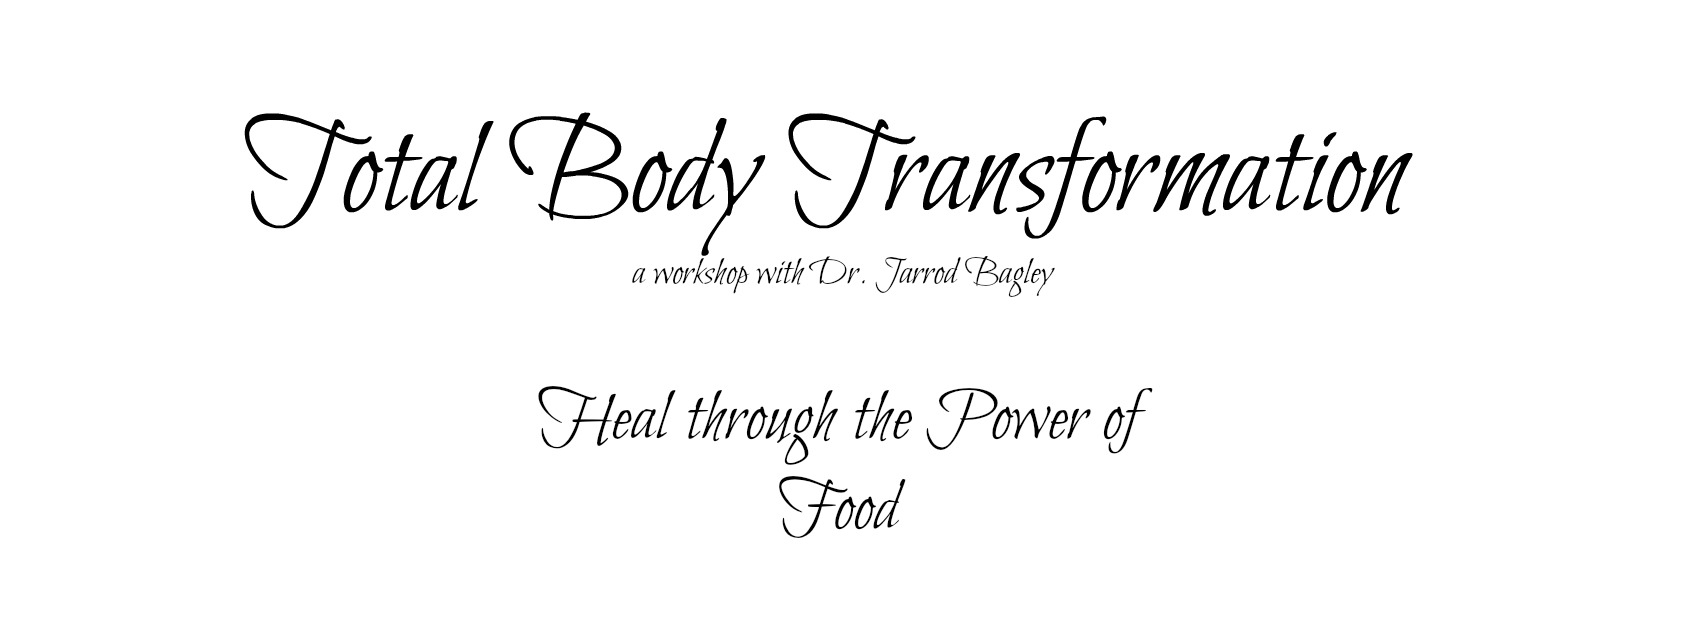 Total Body Transformation Workshop